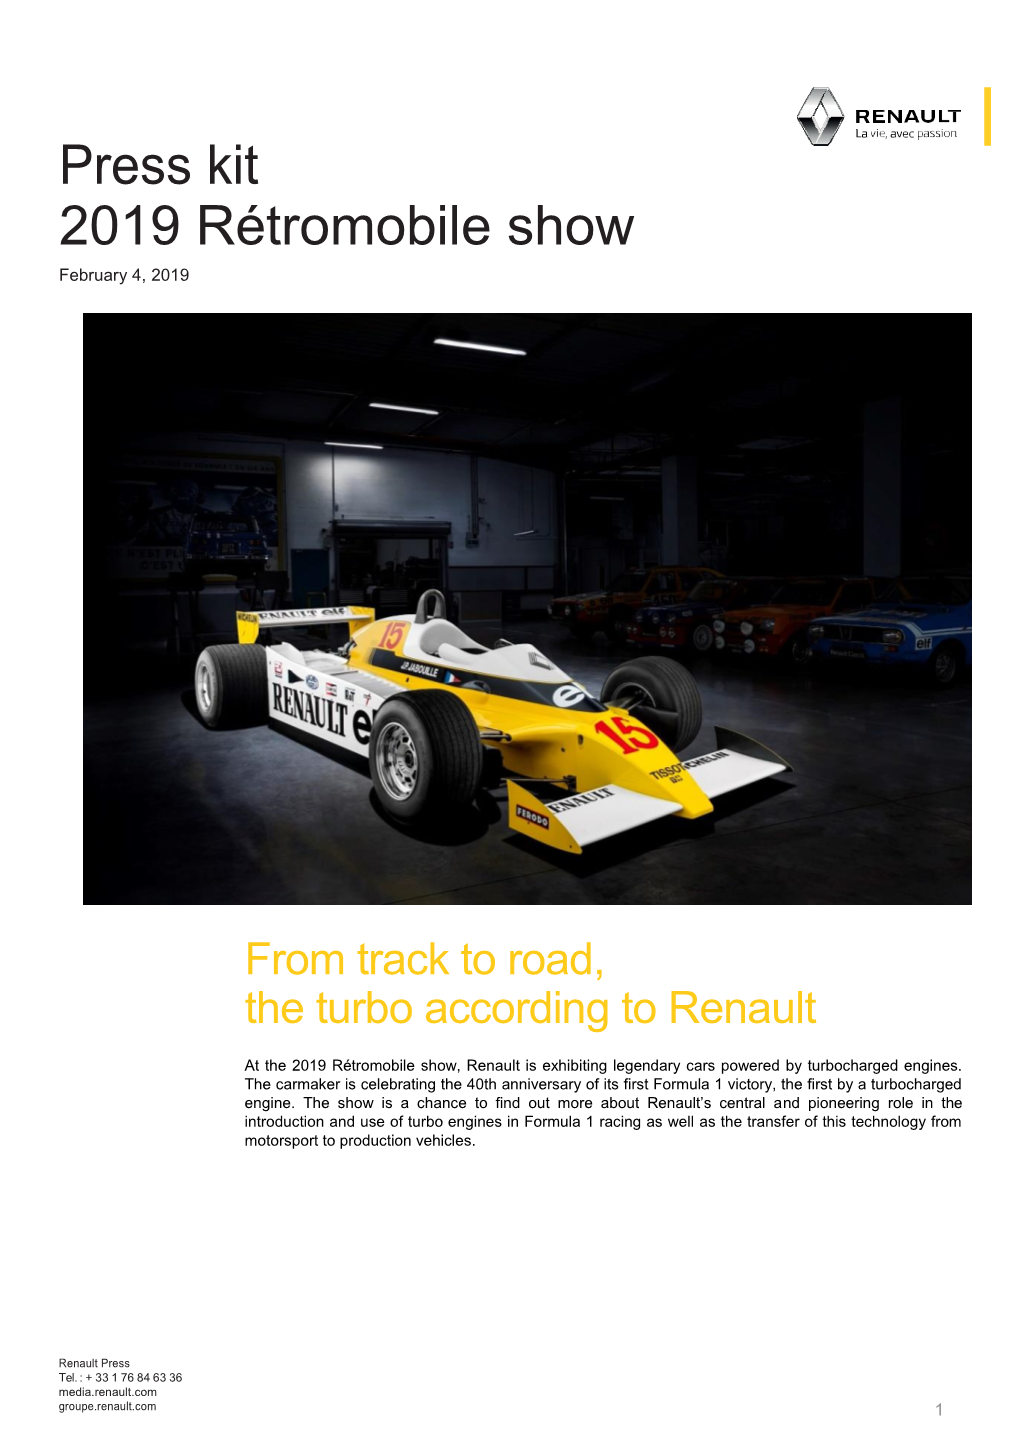 Press Kit 2019 Rétromobile Show February 4, 2019